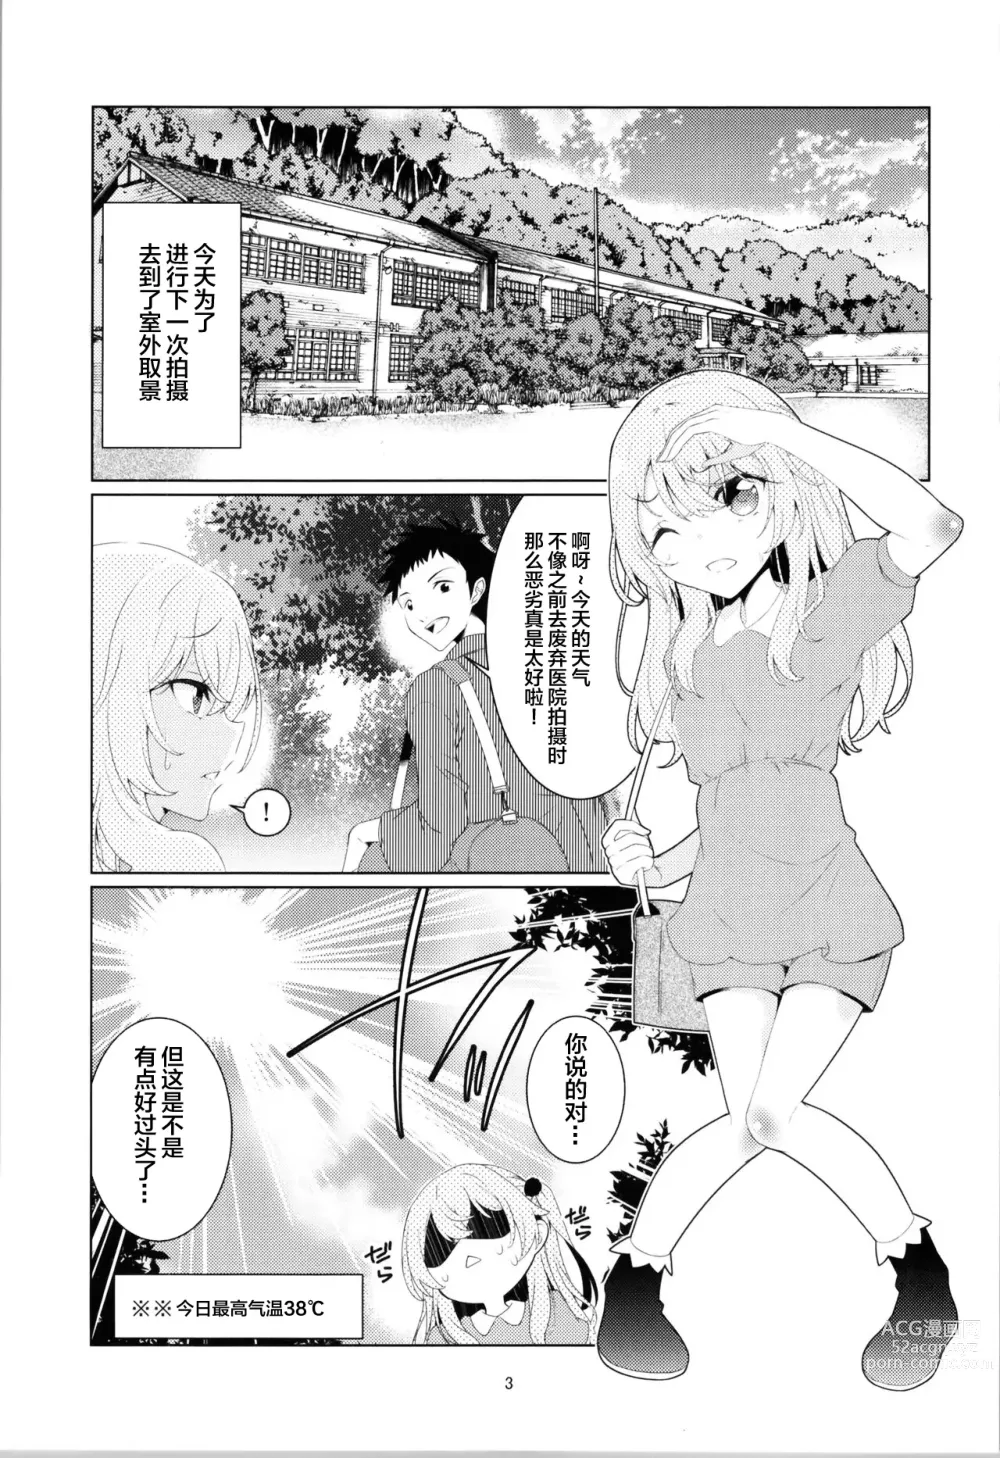 Page 3 of doujinshi Juju no Hinyou na Bouken - Jujus urinary adventure